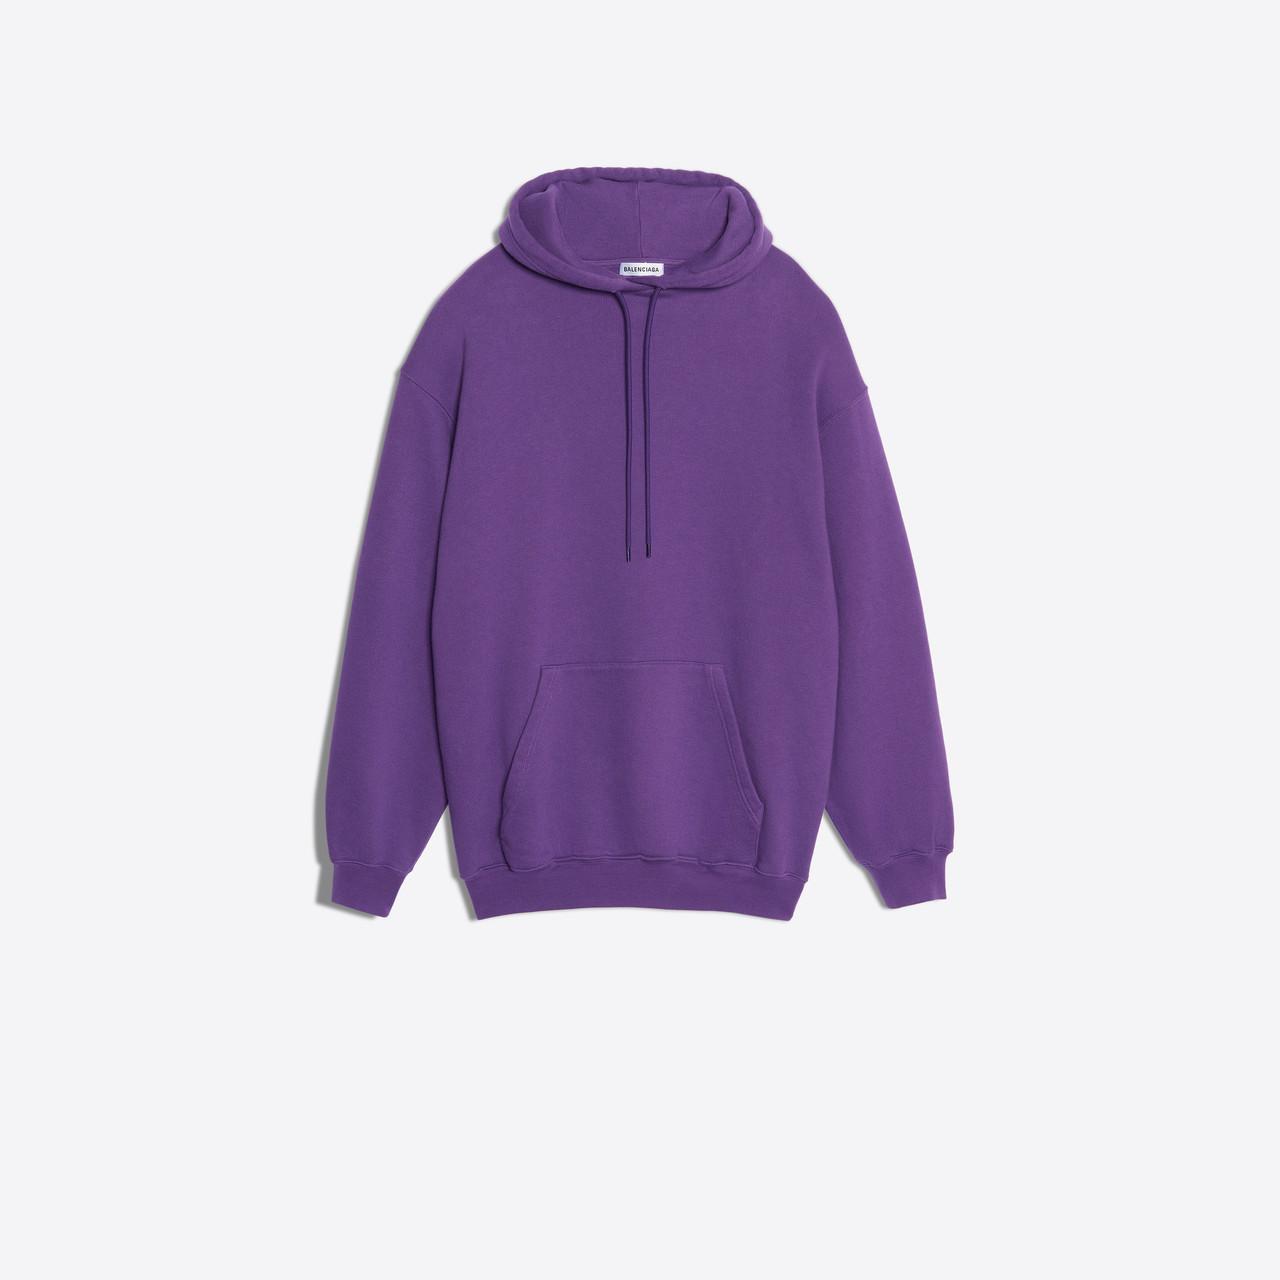 Balenciaga Cotton Logo Hoodie Sweater in Purple - Lyst